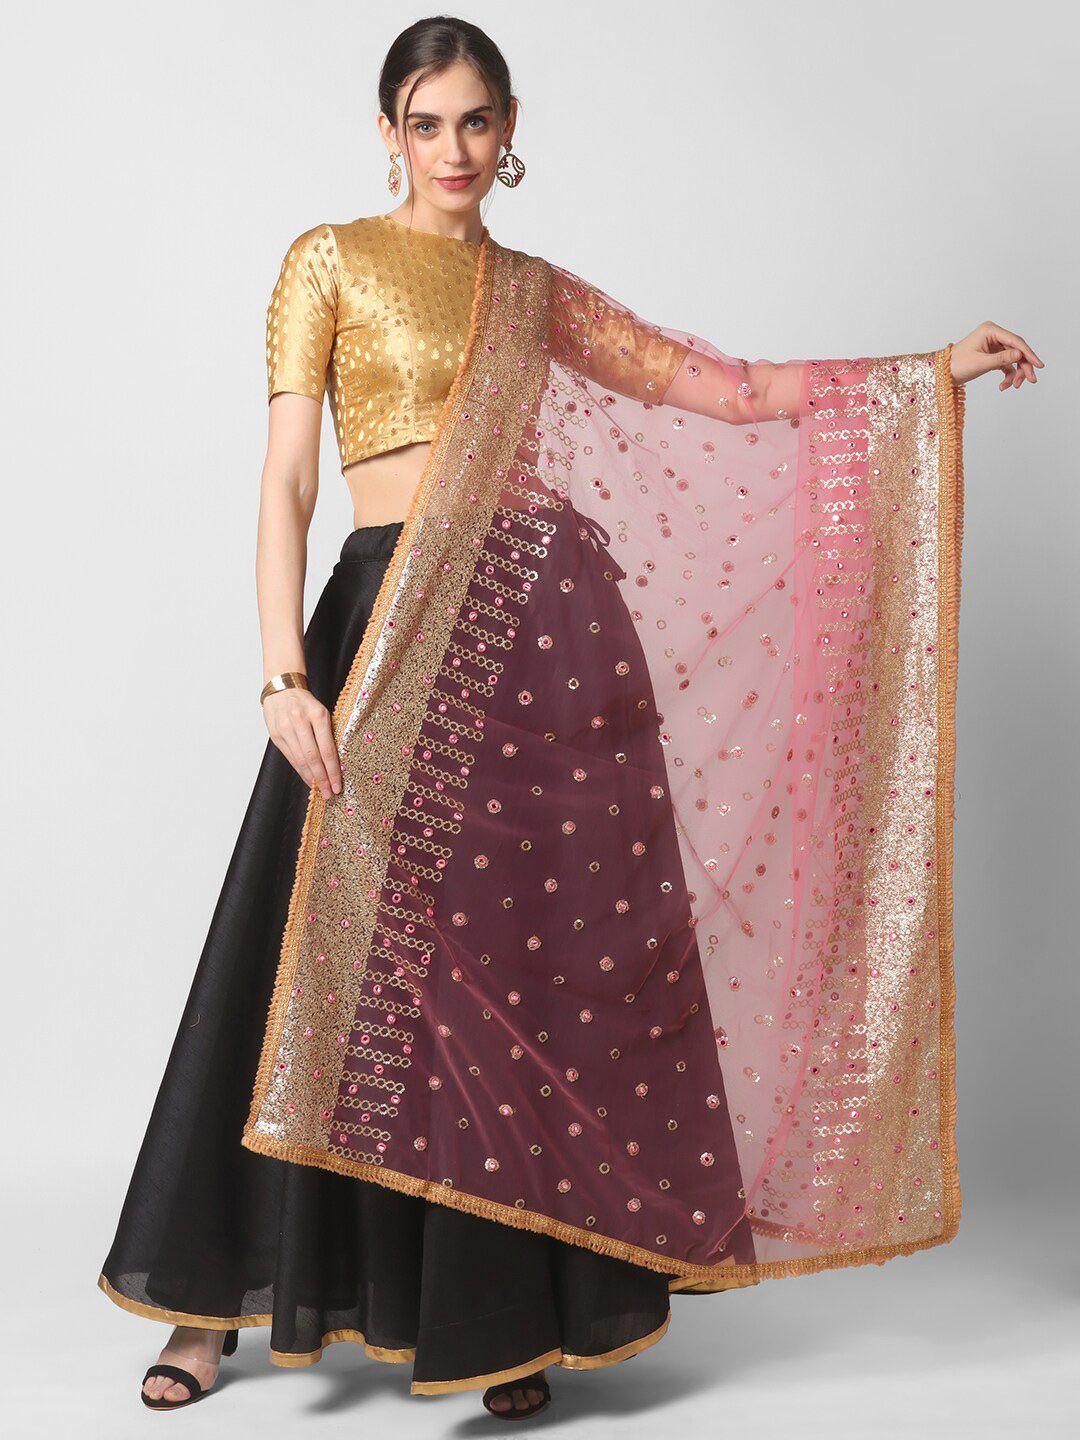 dupatta-bazaar-pink-&-gold-ethnic-motifs-embroidered-dupatta-with-sequinned-details